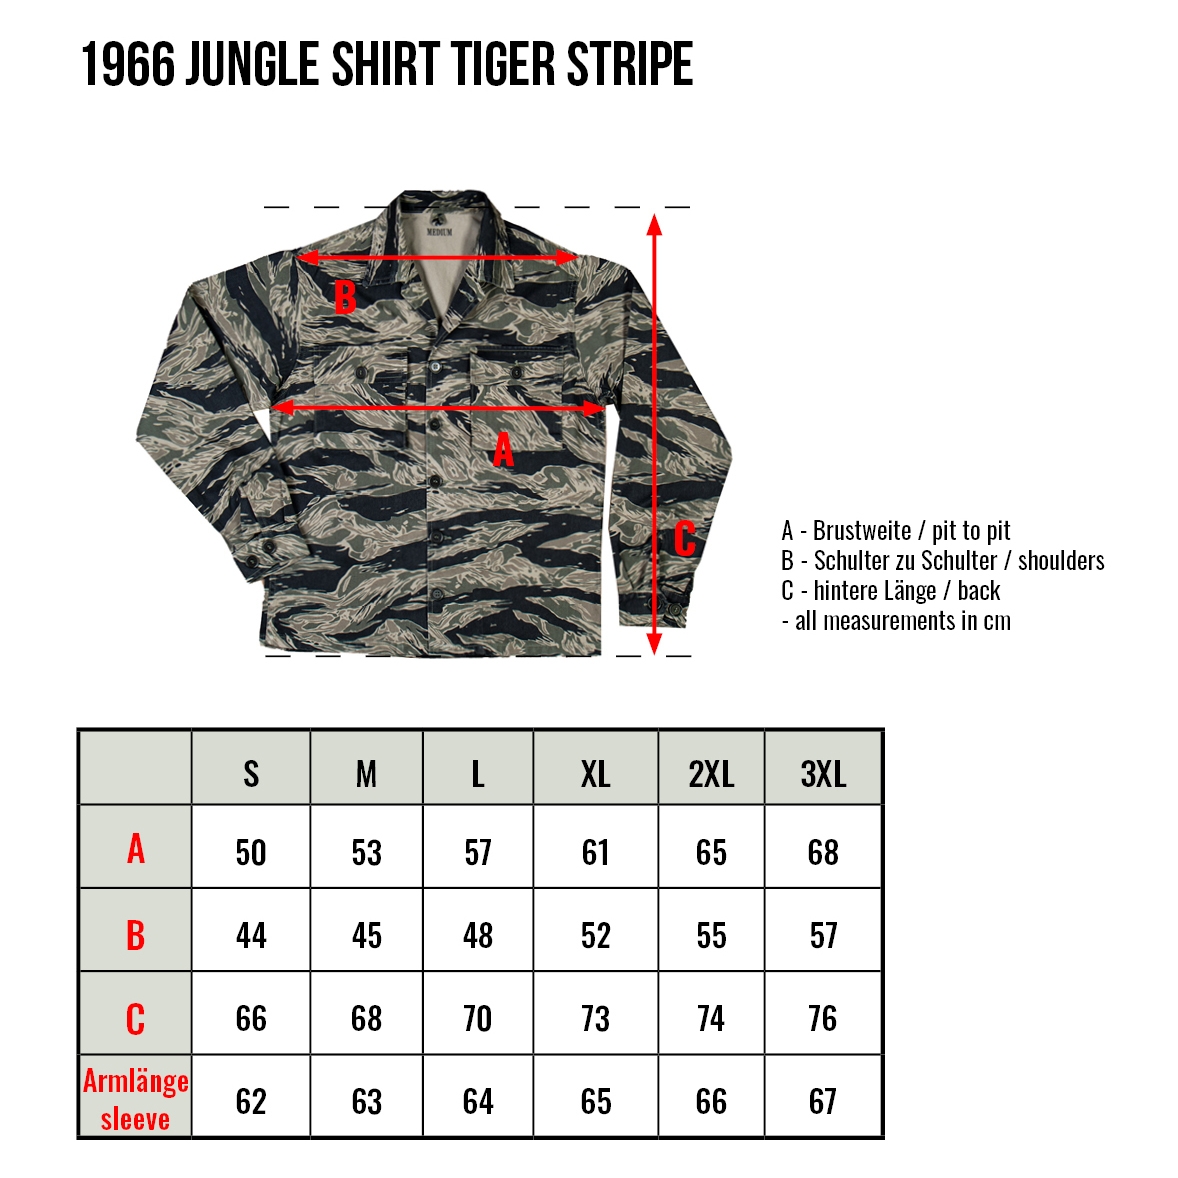 Pike Brothers 1966 Jungle Shirt Tiger Stripe